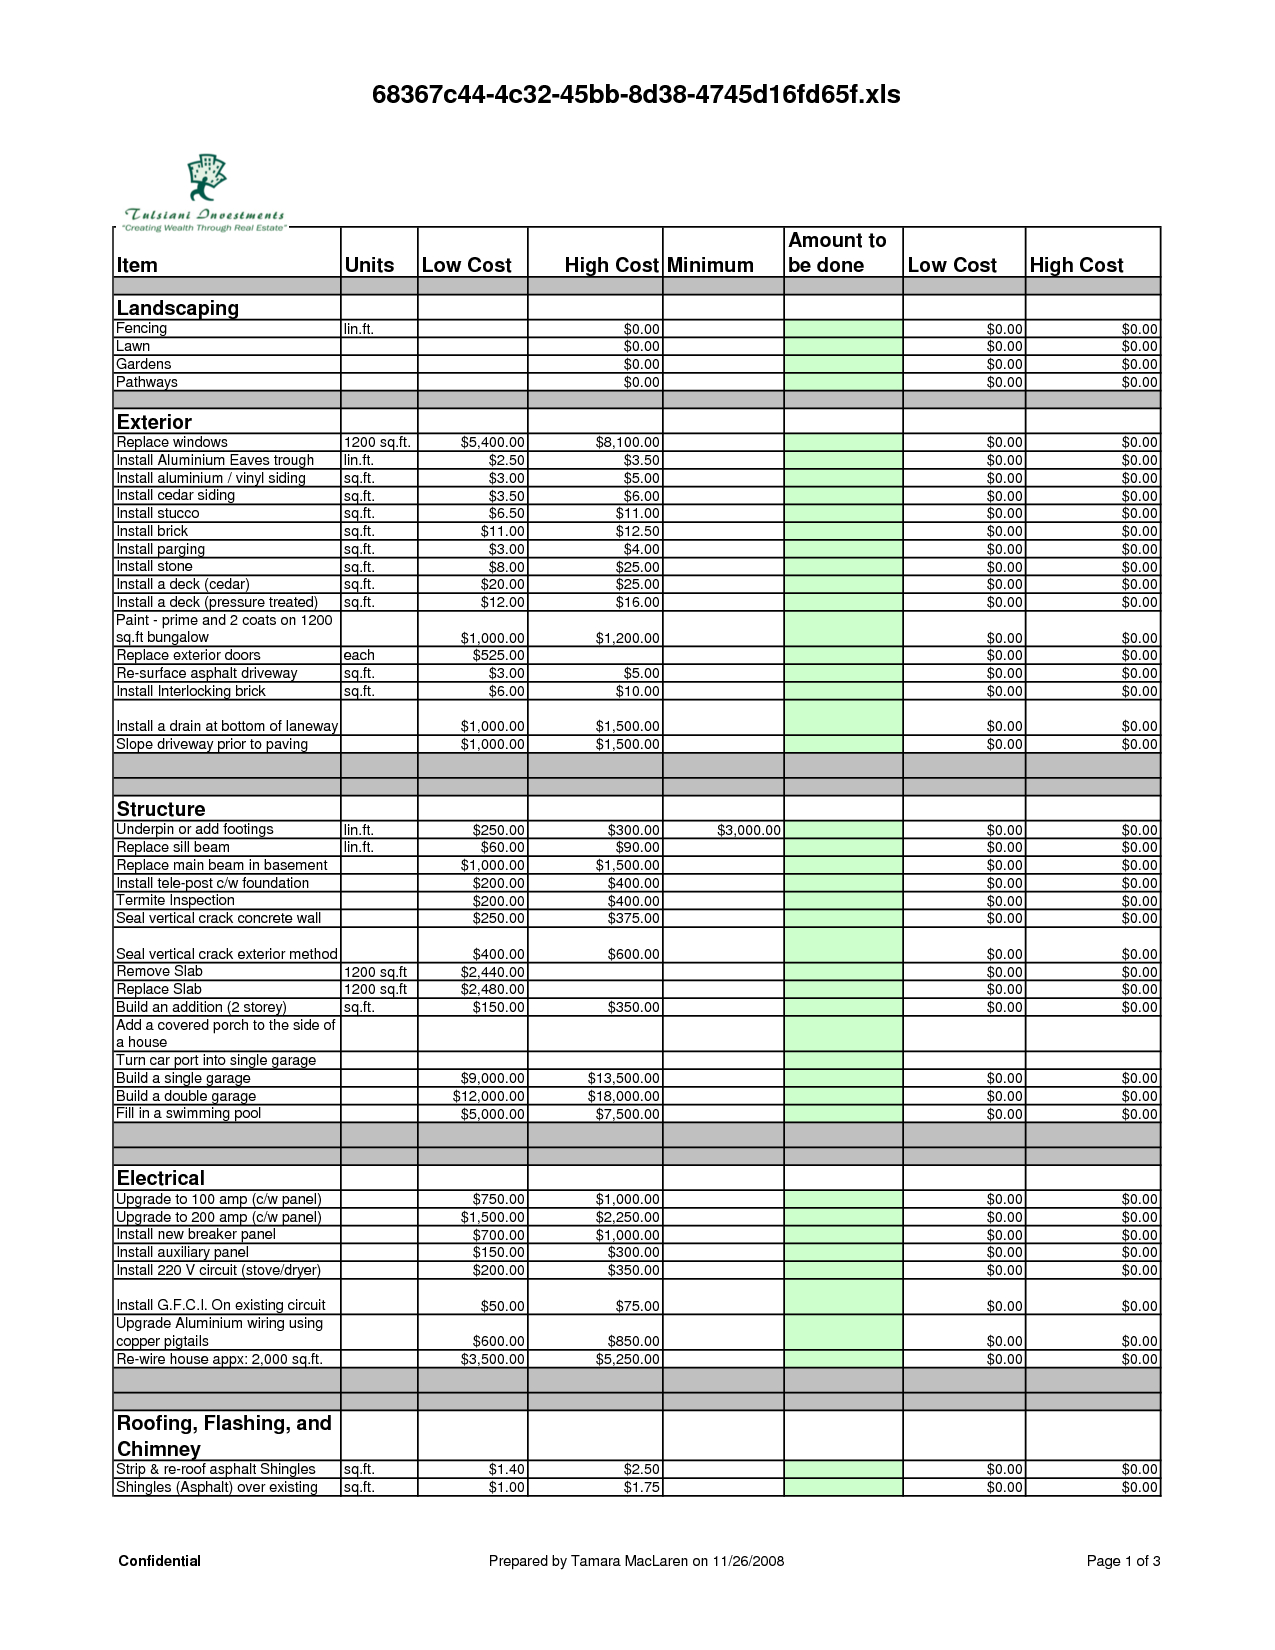 Excel Estimating Spreadsheet Templates In Excel Estimating Templates  Tagua Spreadsheet Sample Collection